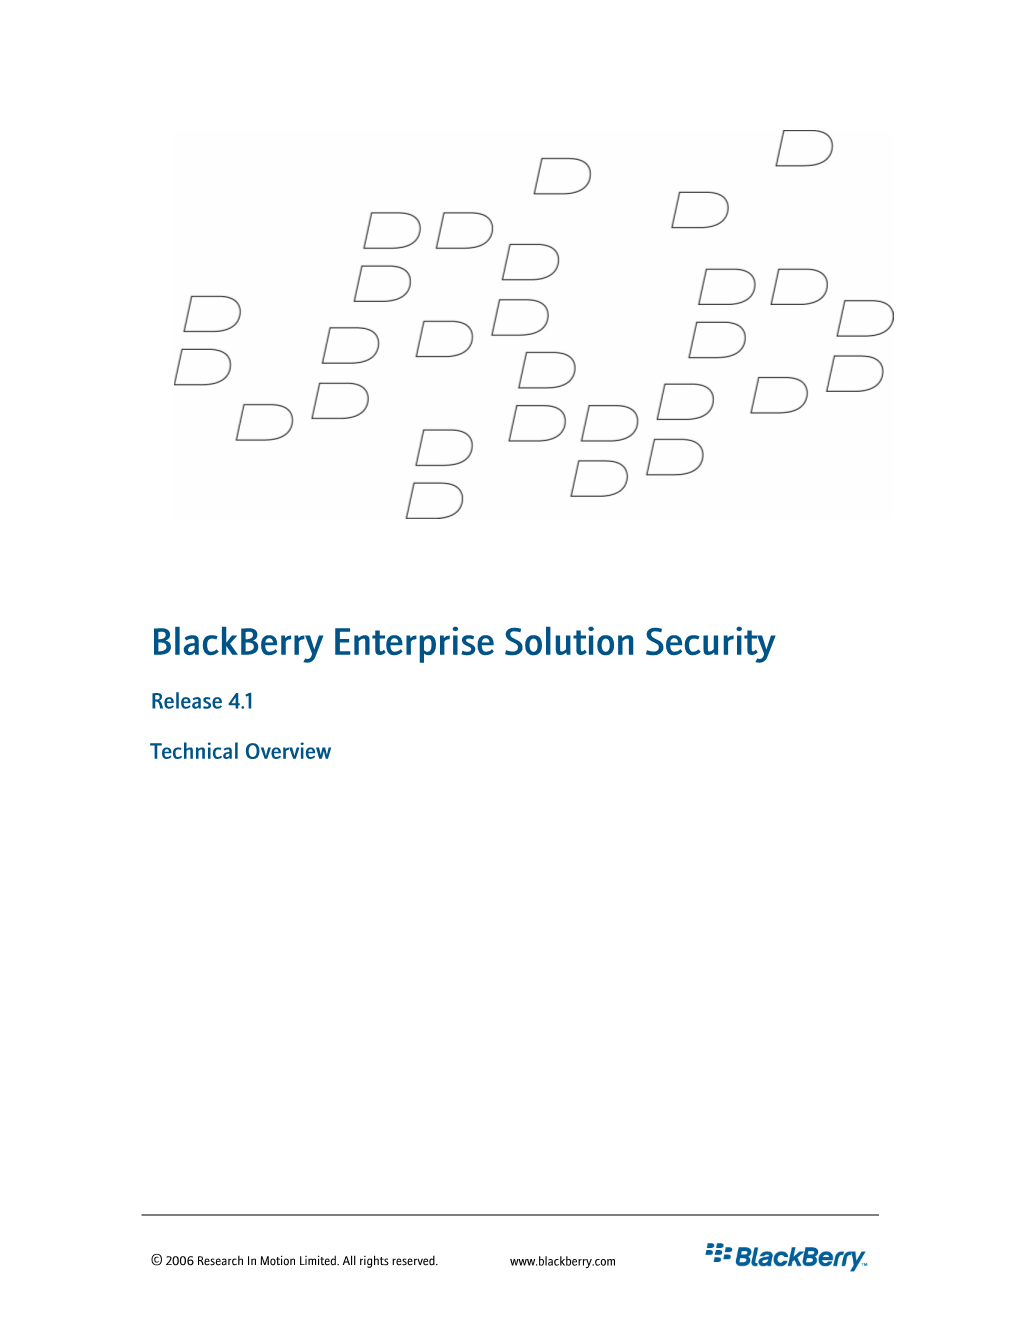 Blackberry Enterprise Solution Security Version 4.1 Technical